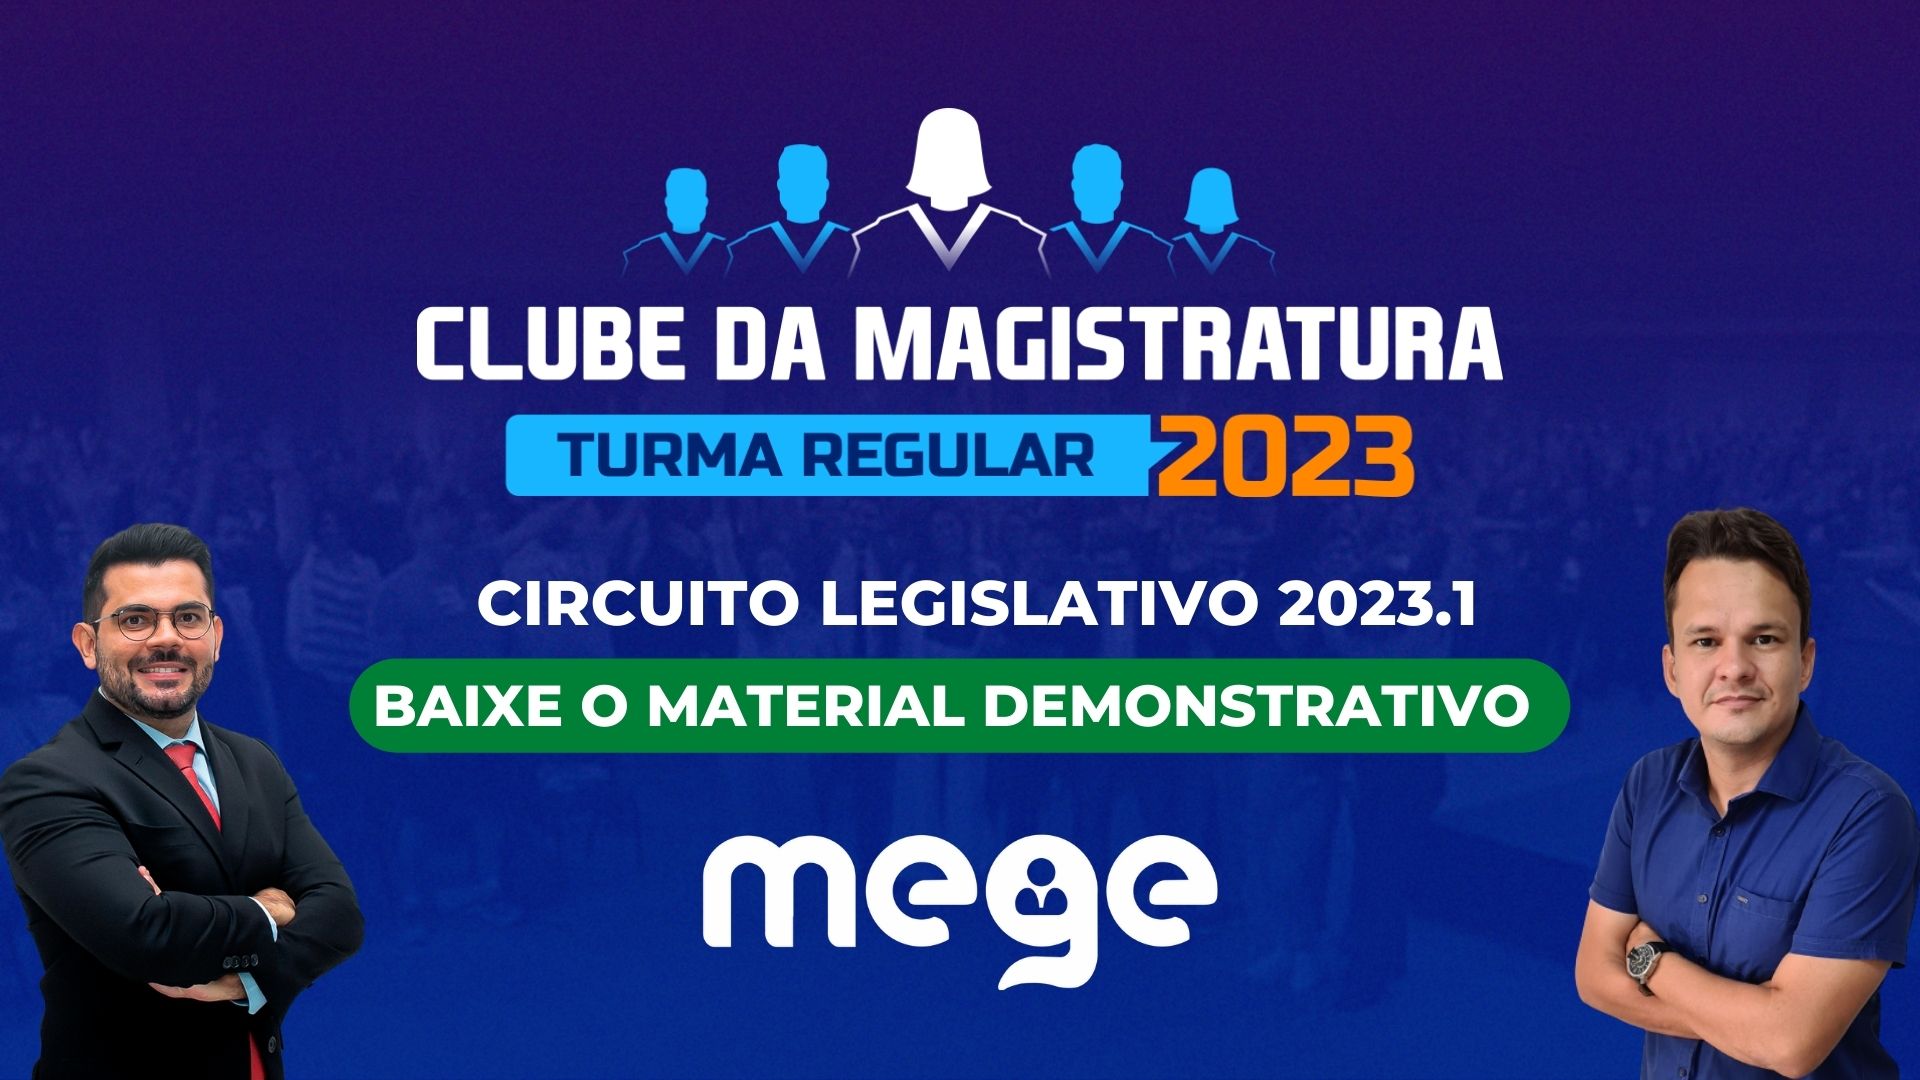 Clube da Magistratura 2023: baixe o material demonstrativo do circuito legislativo